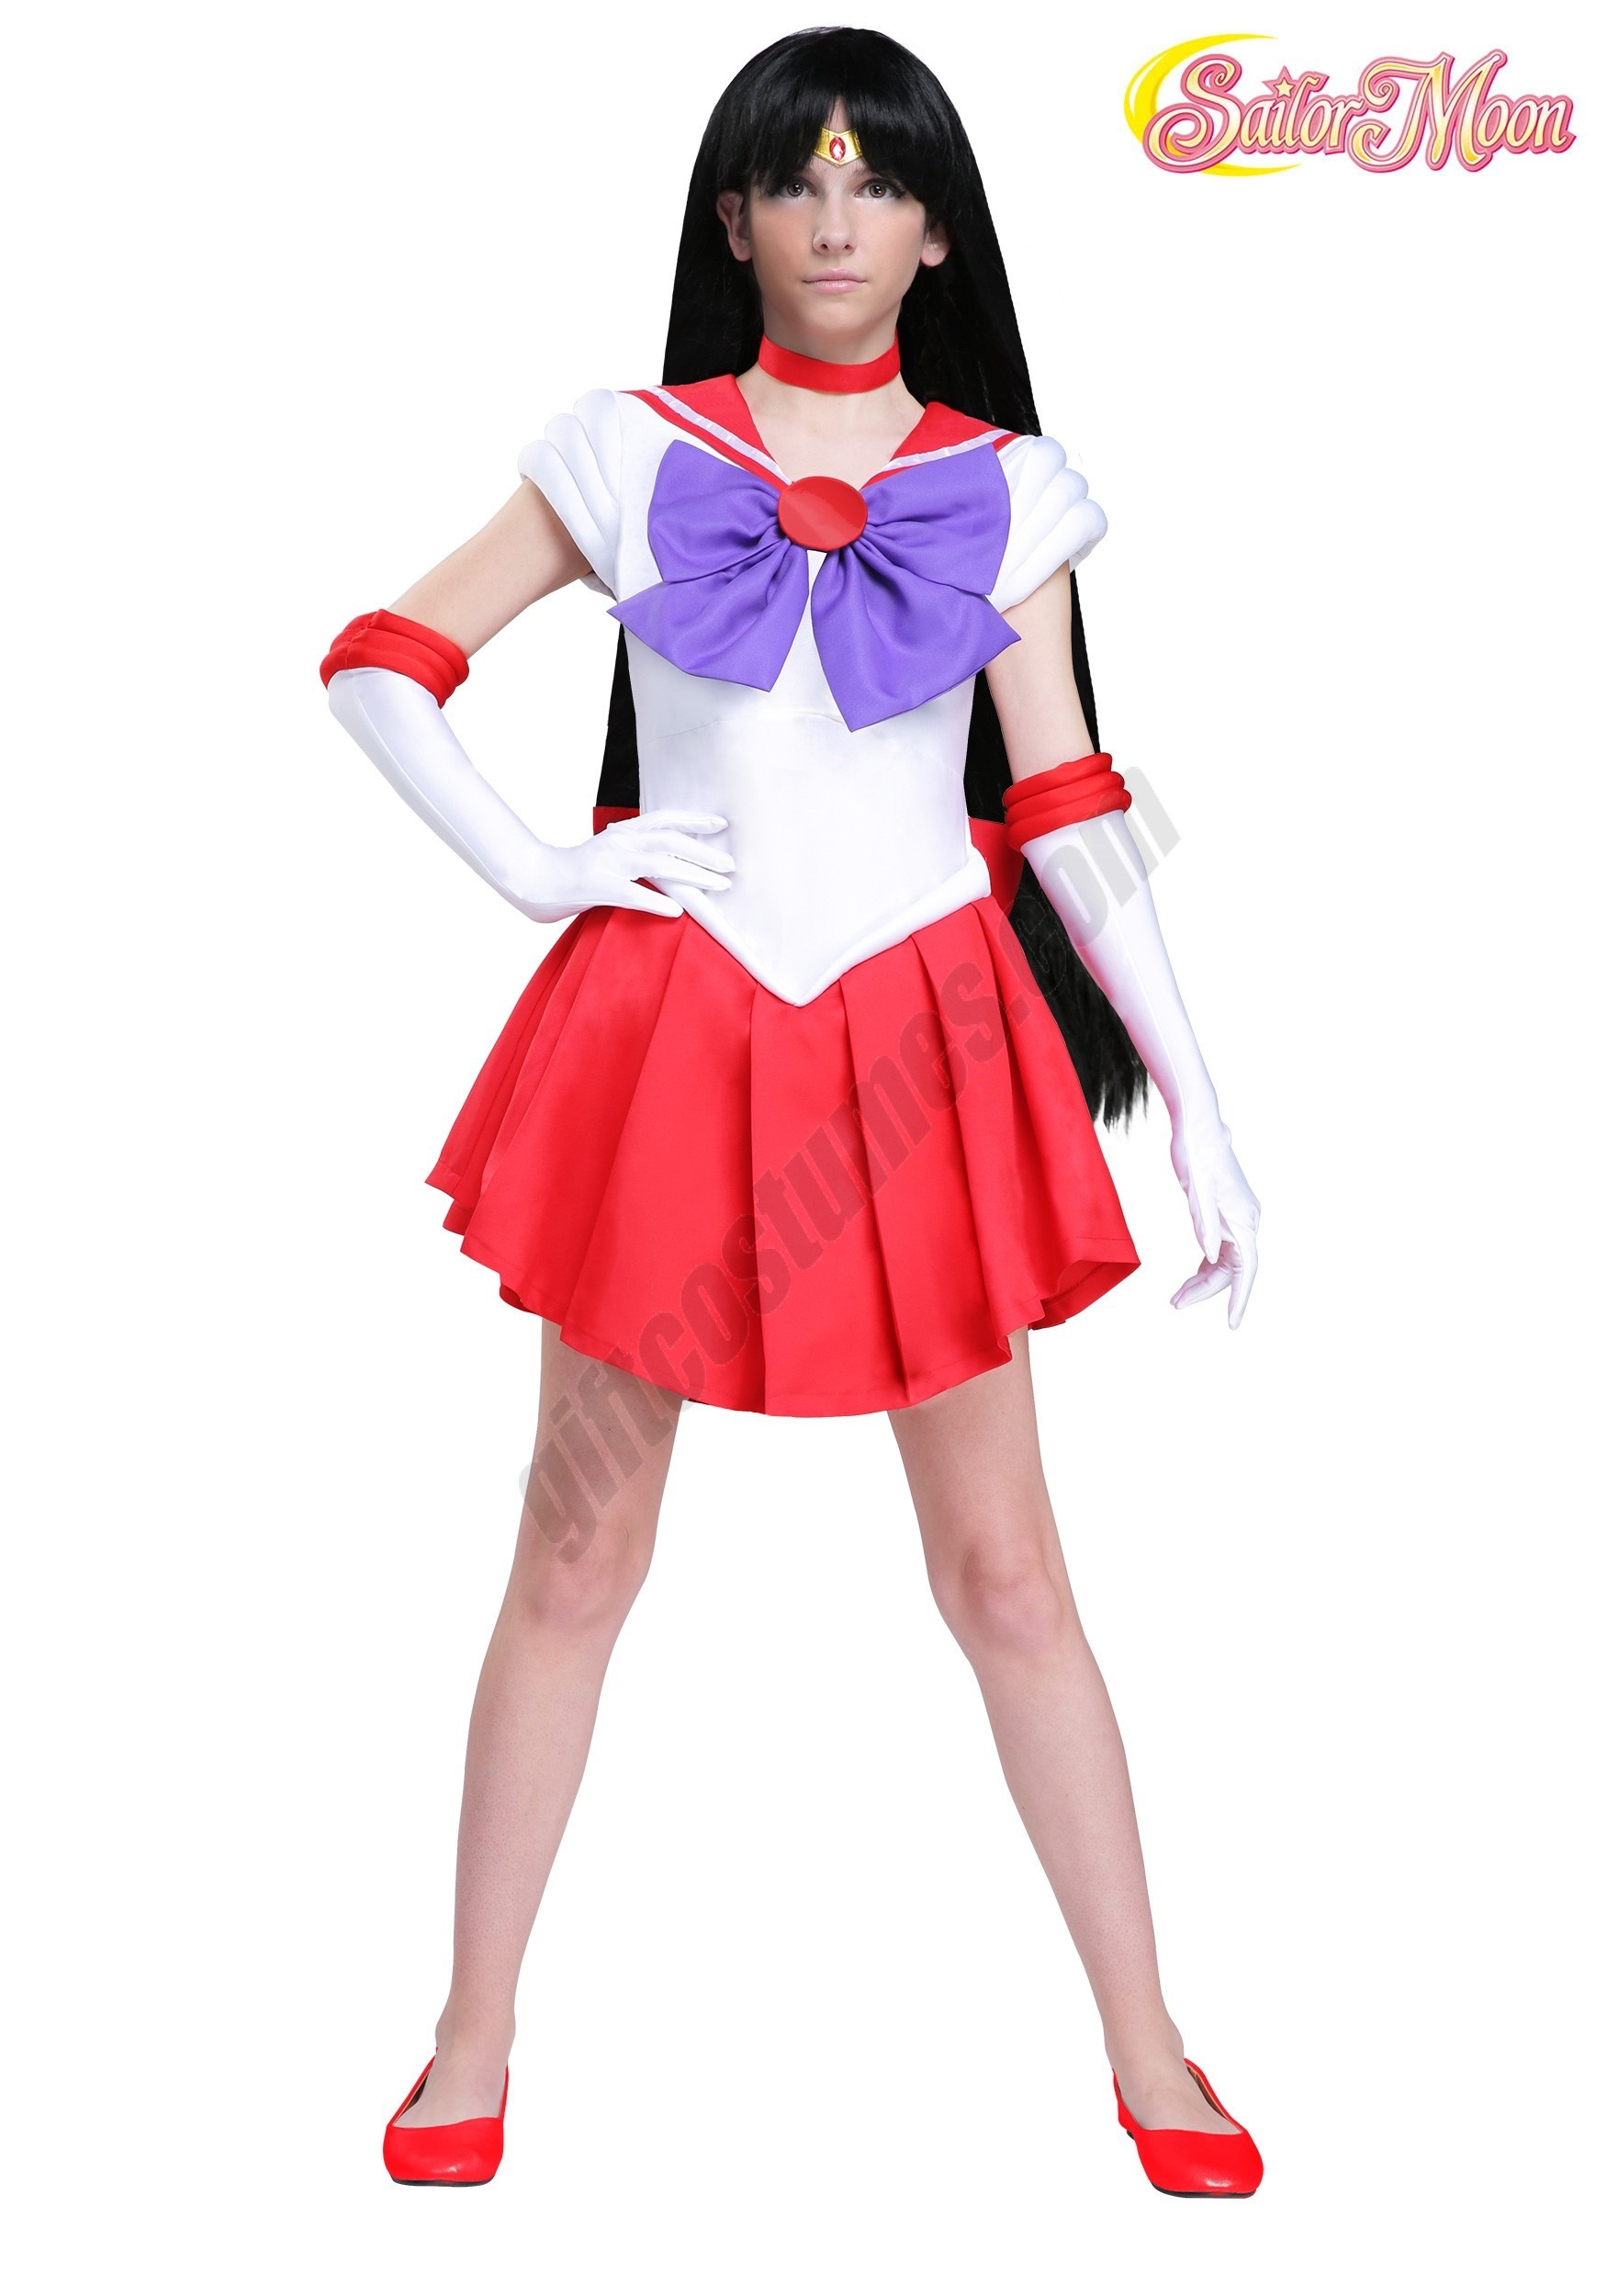 Sailor Moon: Sailor Mars Costume for Women Promotions - Sailor Moon: Sailor Mars Costume for Women Promotions